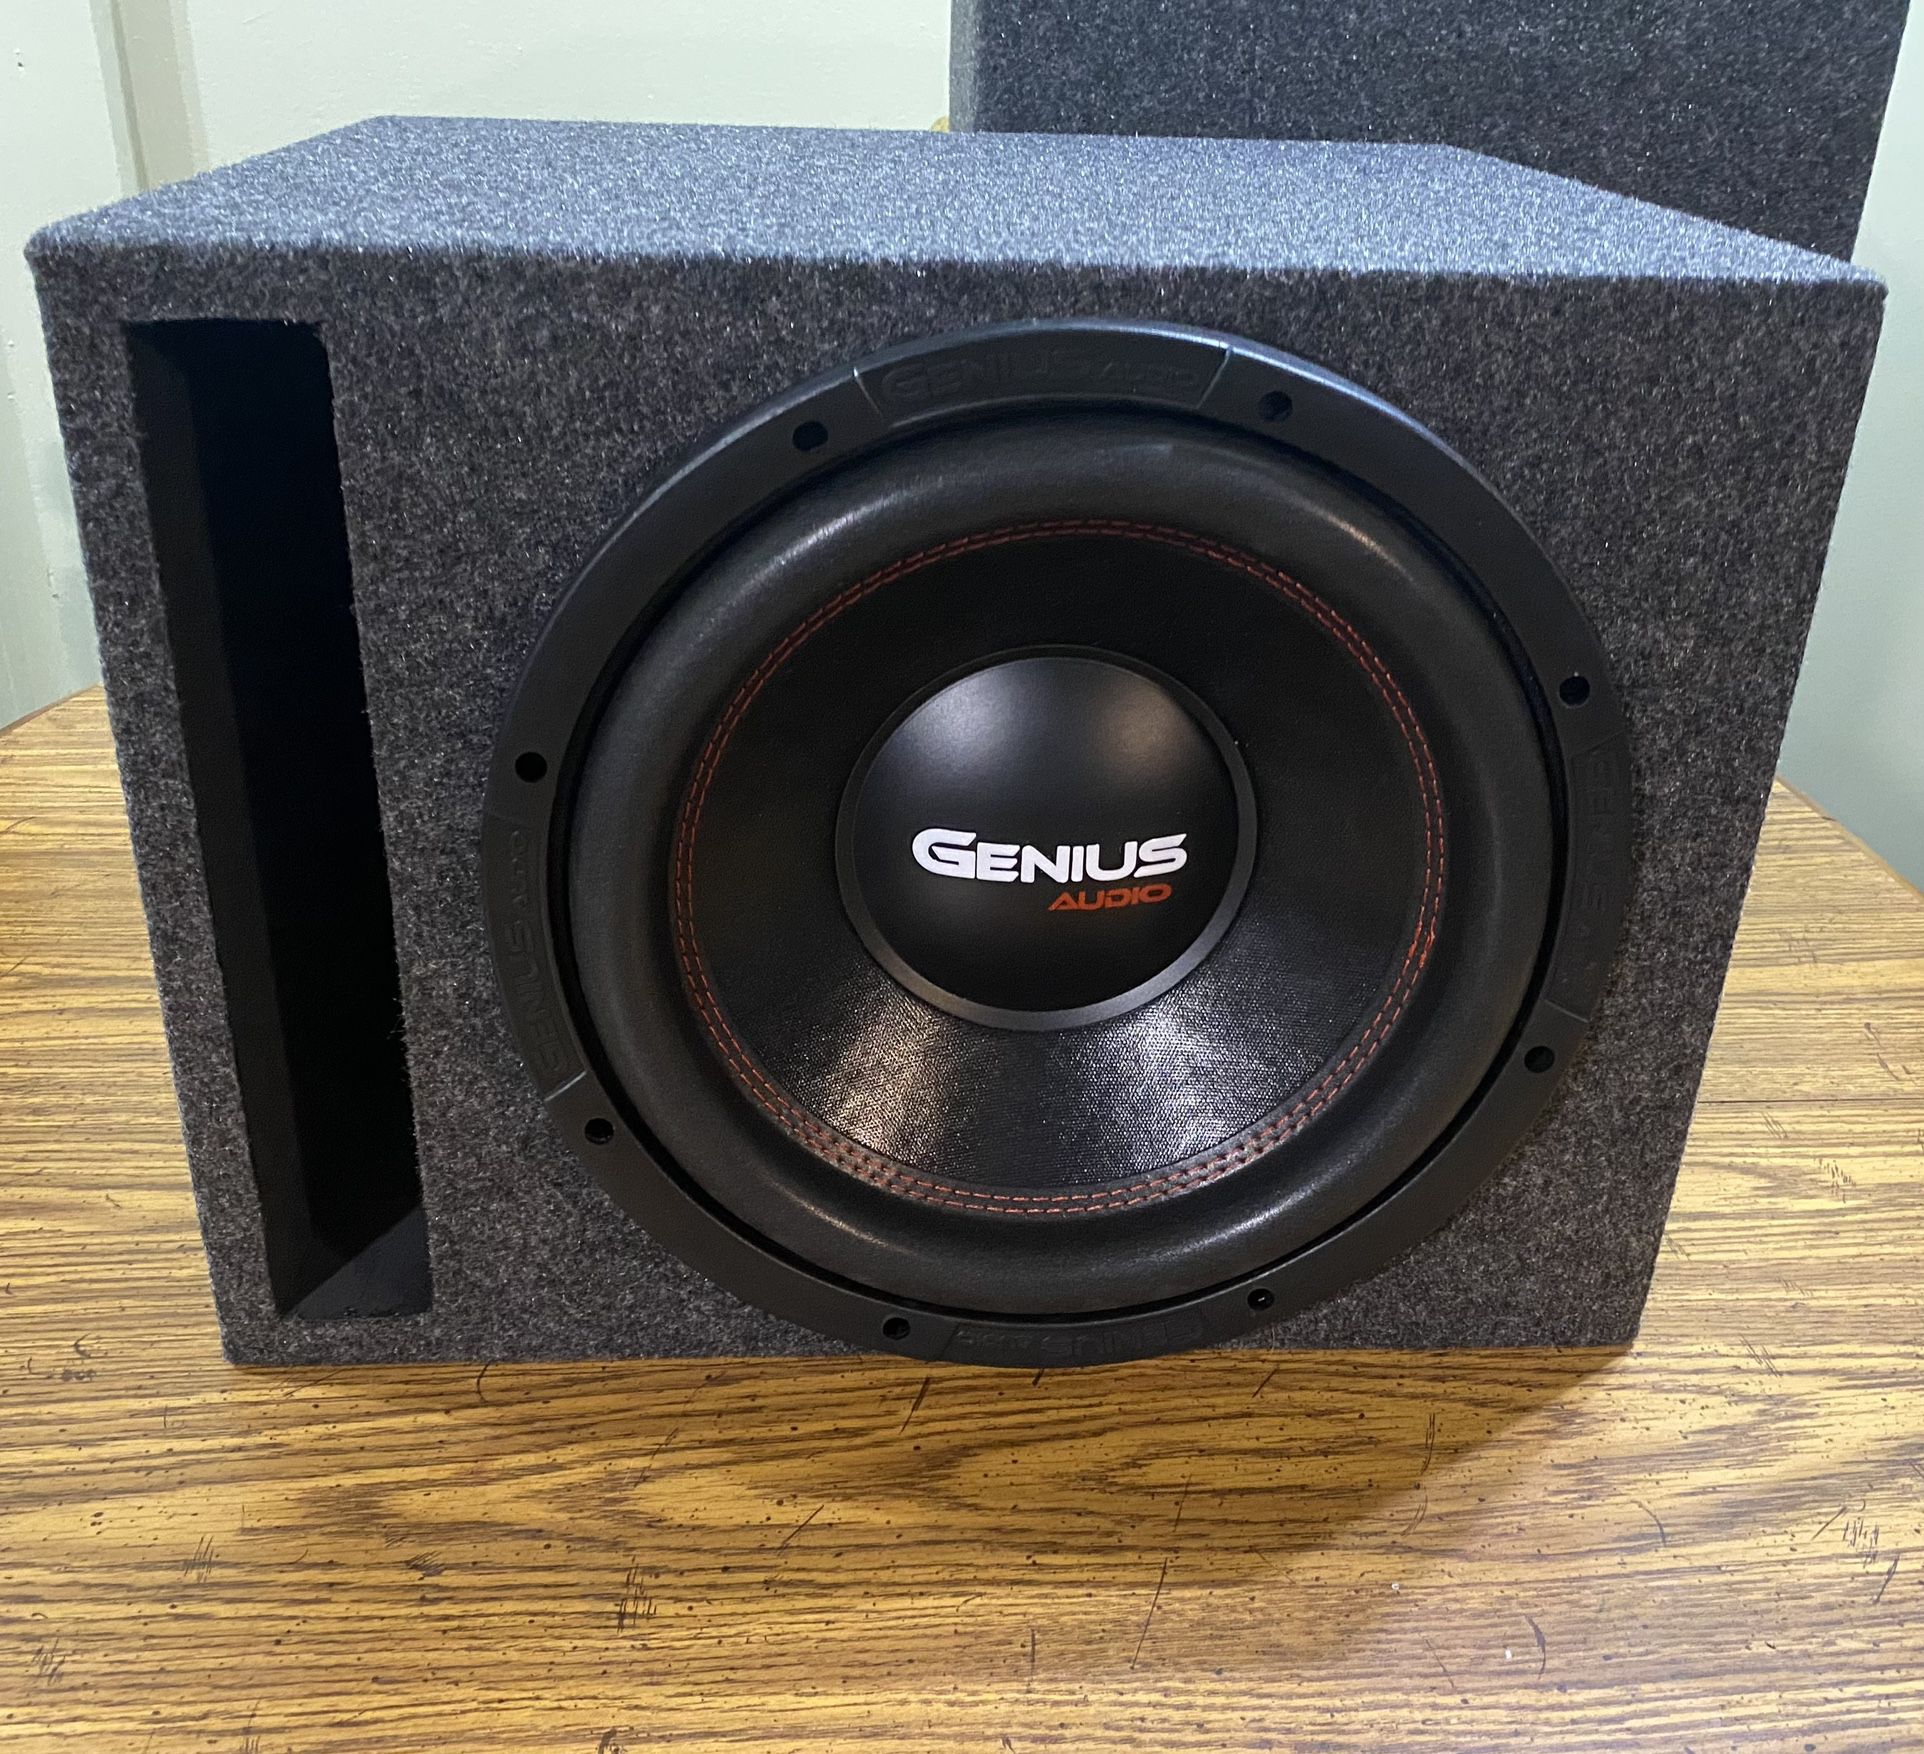 New 12” Genius Audio 800w Max Power Subwoofer + Ported Box 